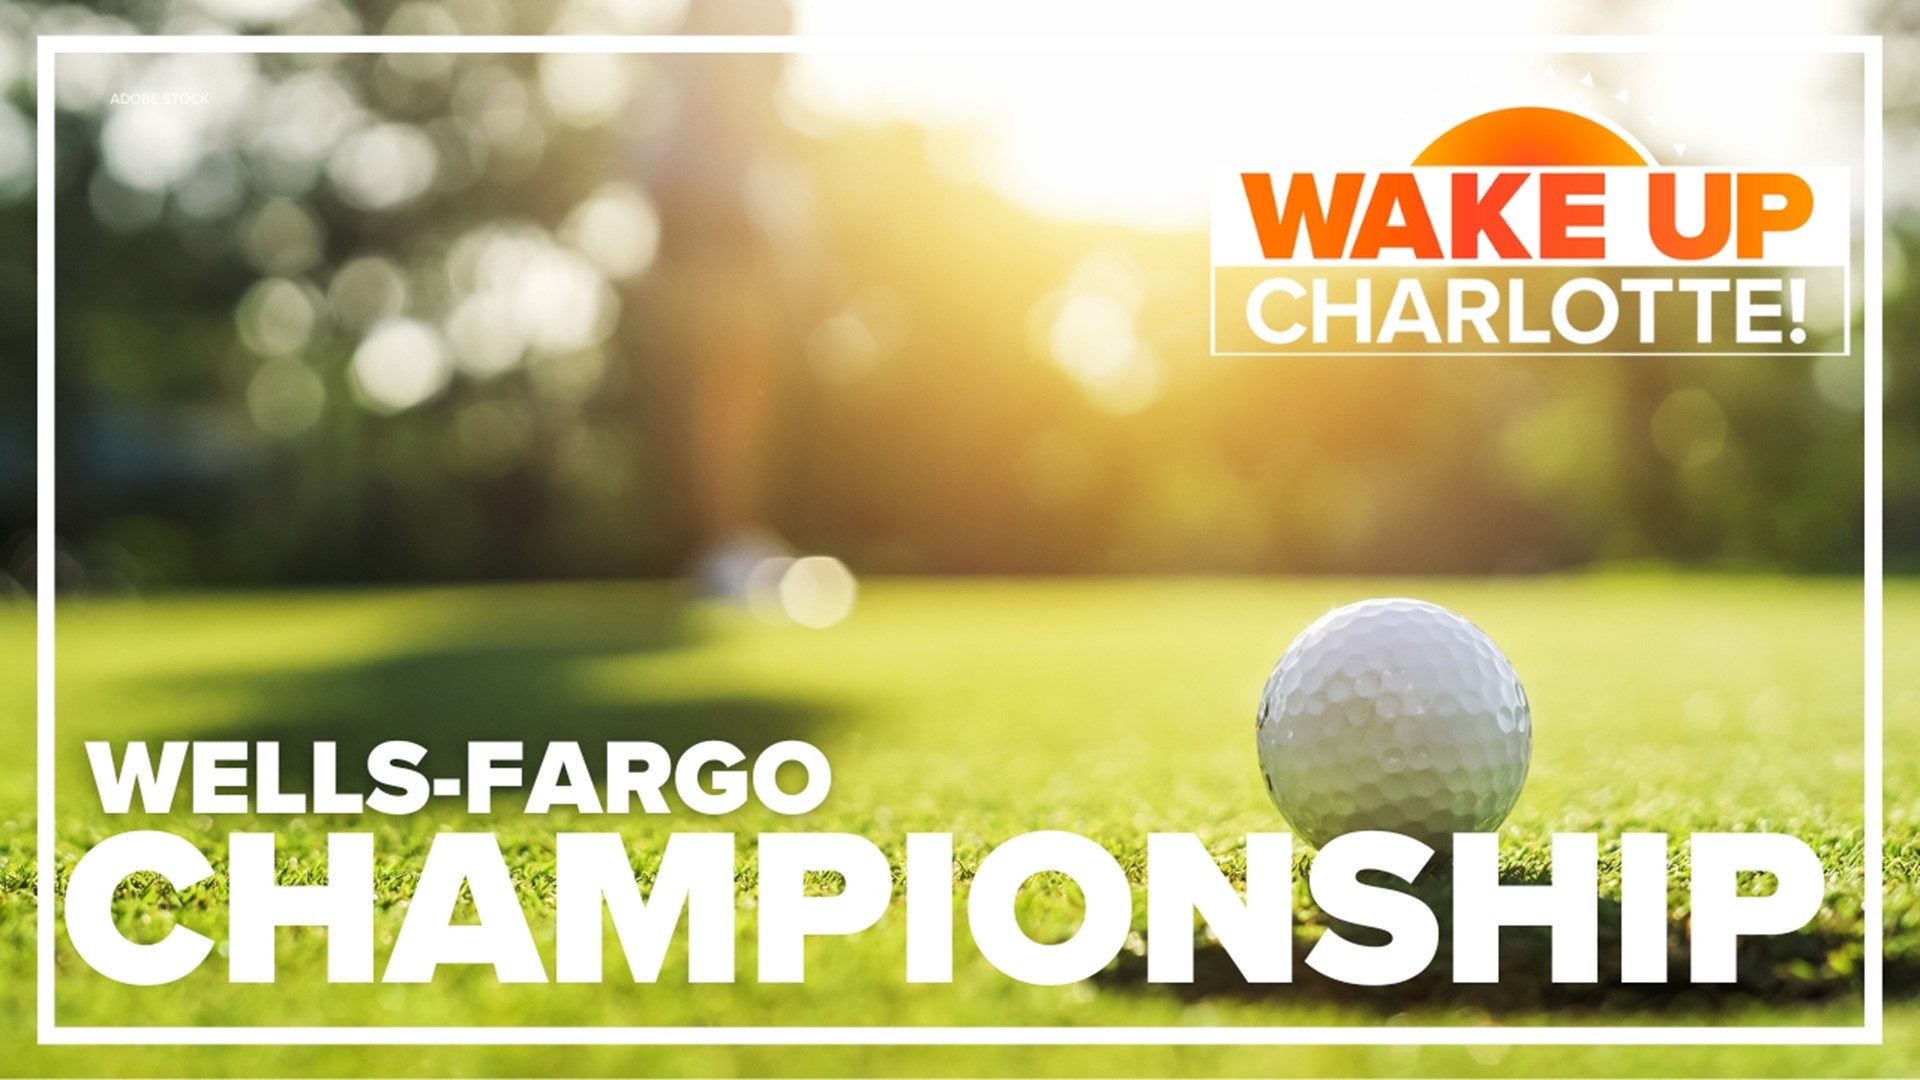 Well Fargo Championship at prestigious Quail Hollow underway wcnc